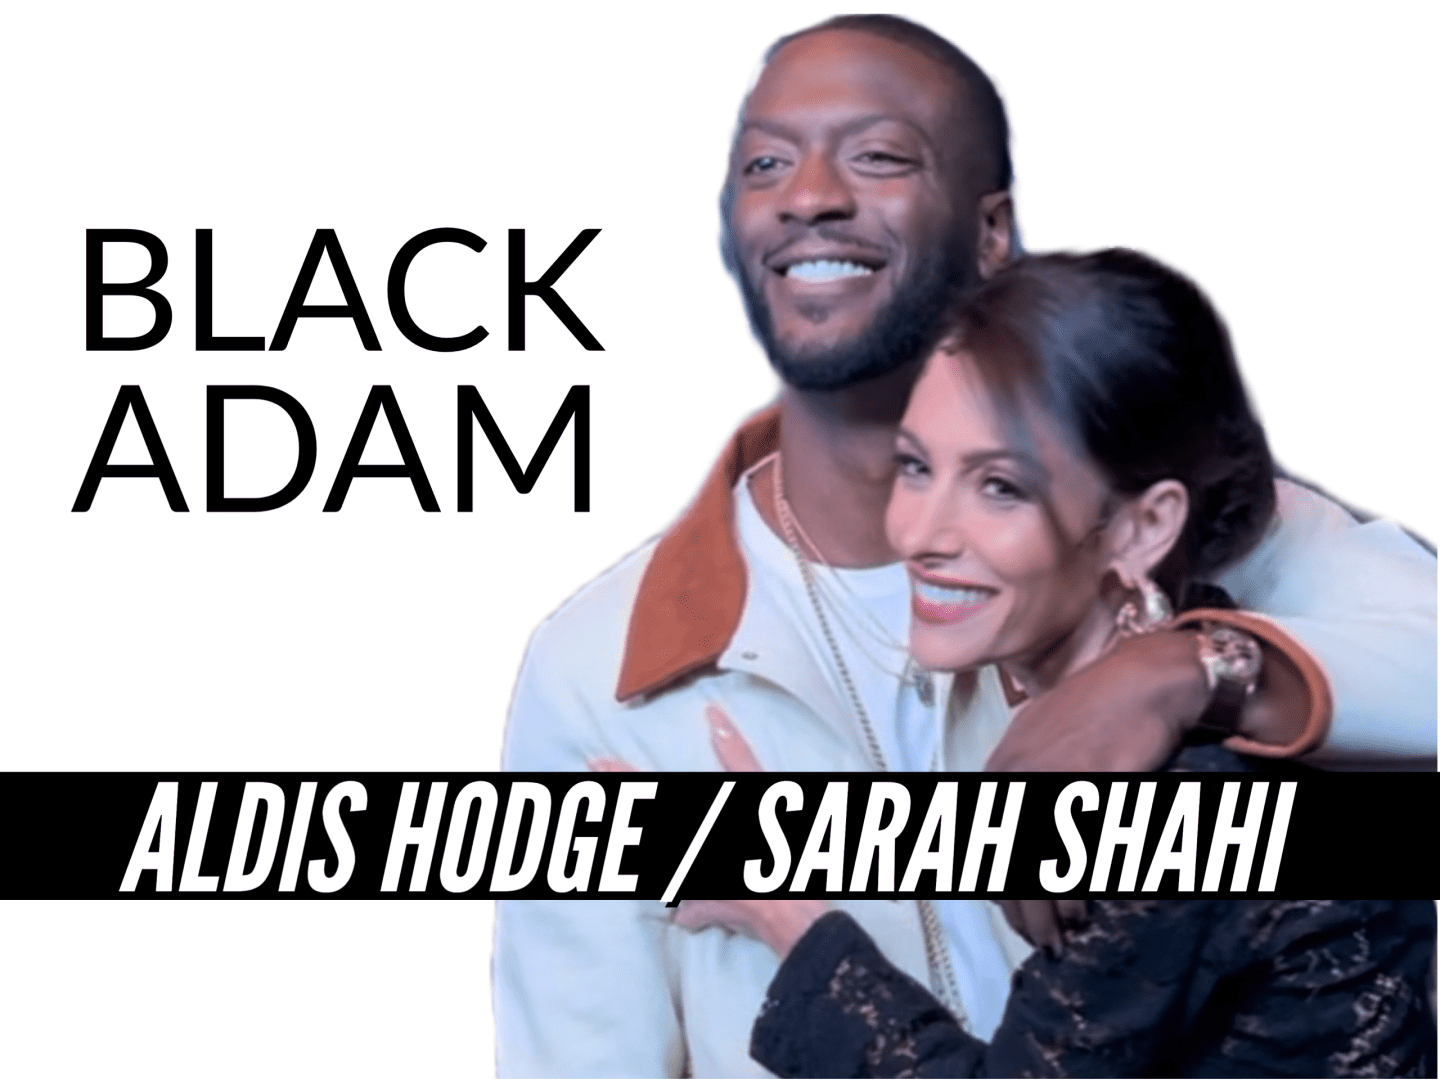 Sarah Shahi Joins the 'Black Adam' Cast - Nerds and Beyond